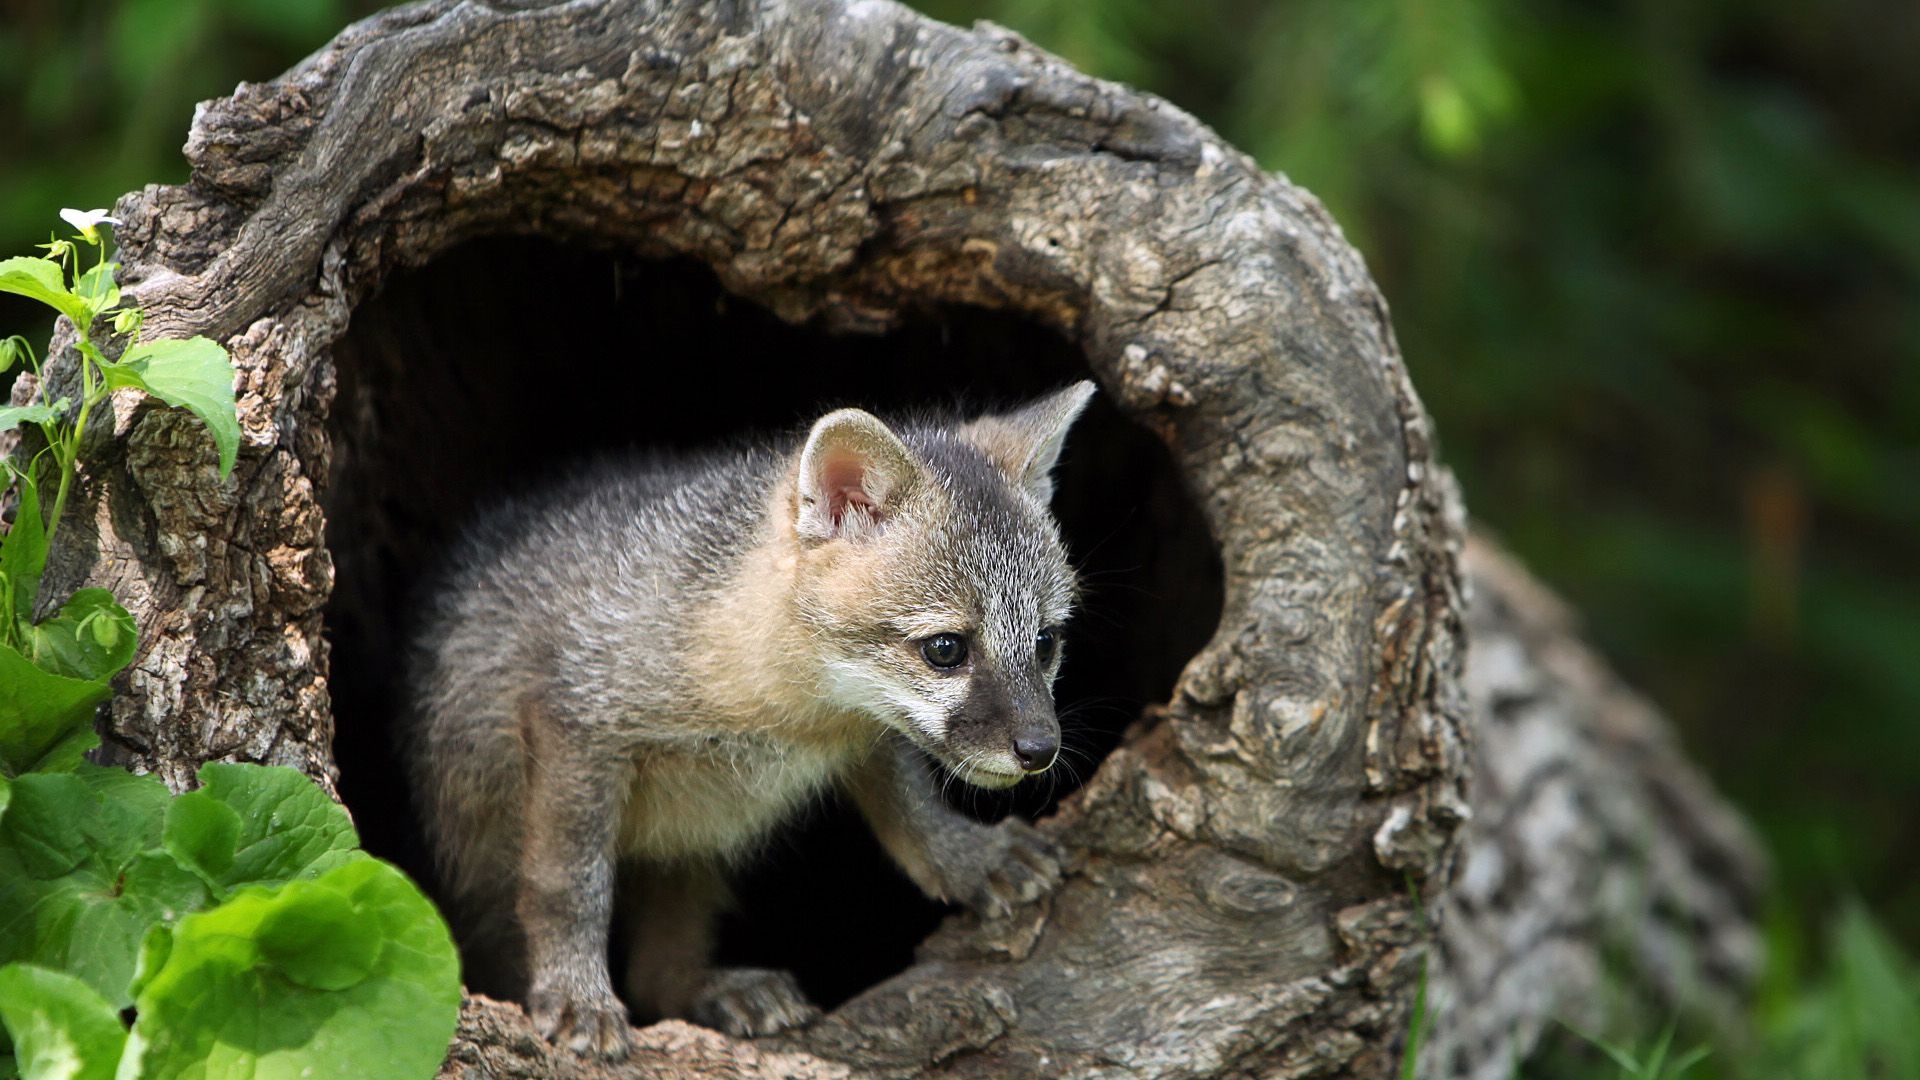 Gray Fox: A fox's den in an old hollow tree, Tree Fox, The species' tree-climbing ability. 1920x1080 Full HD Wallpaper.